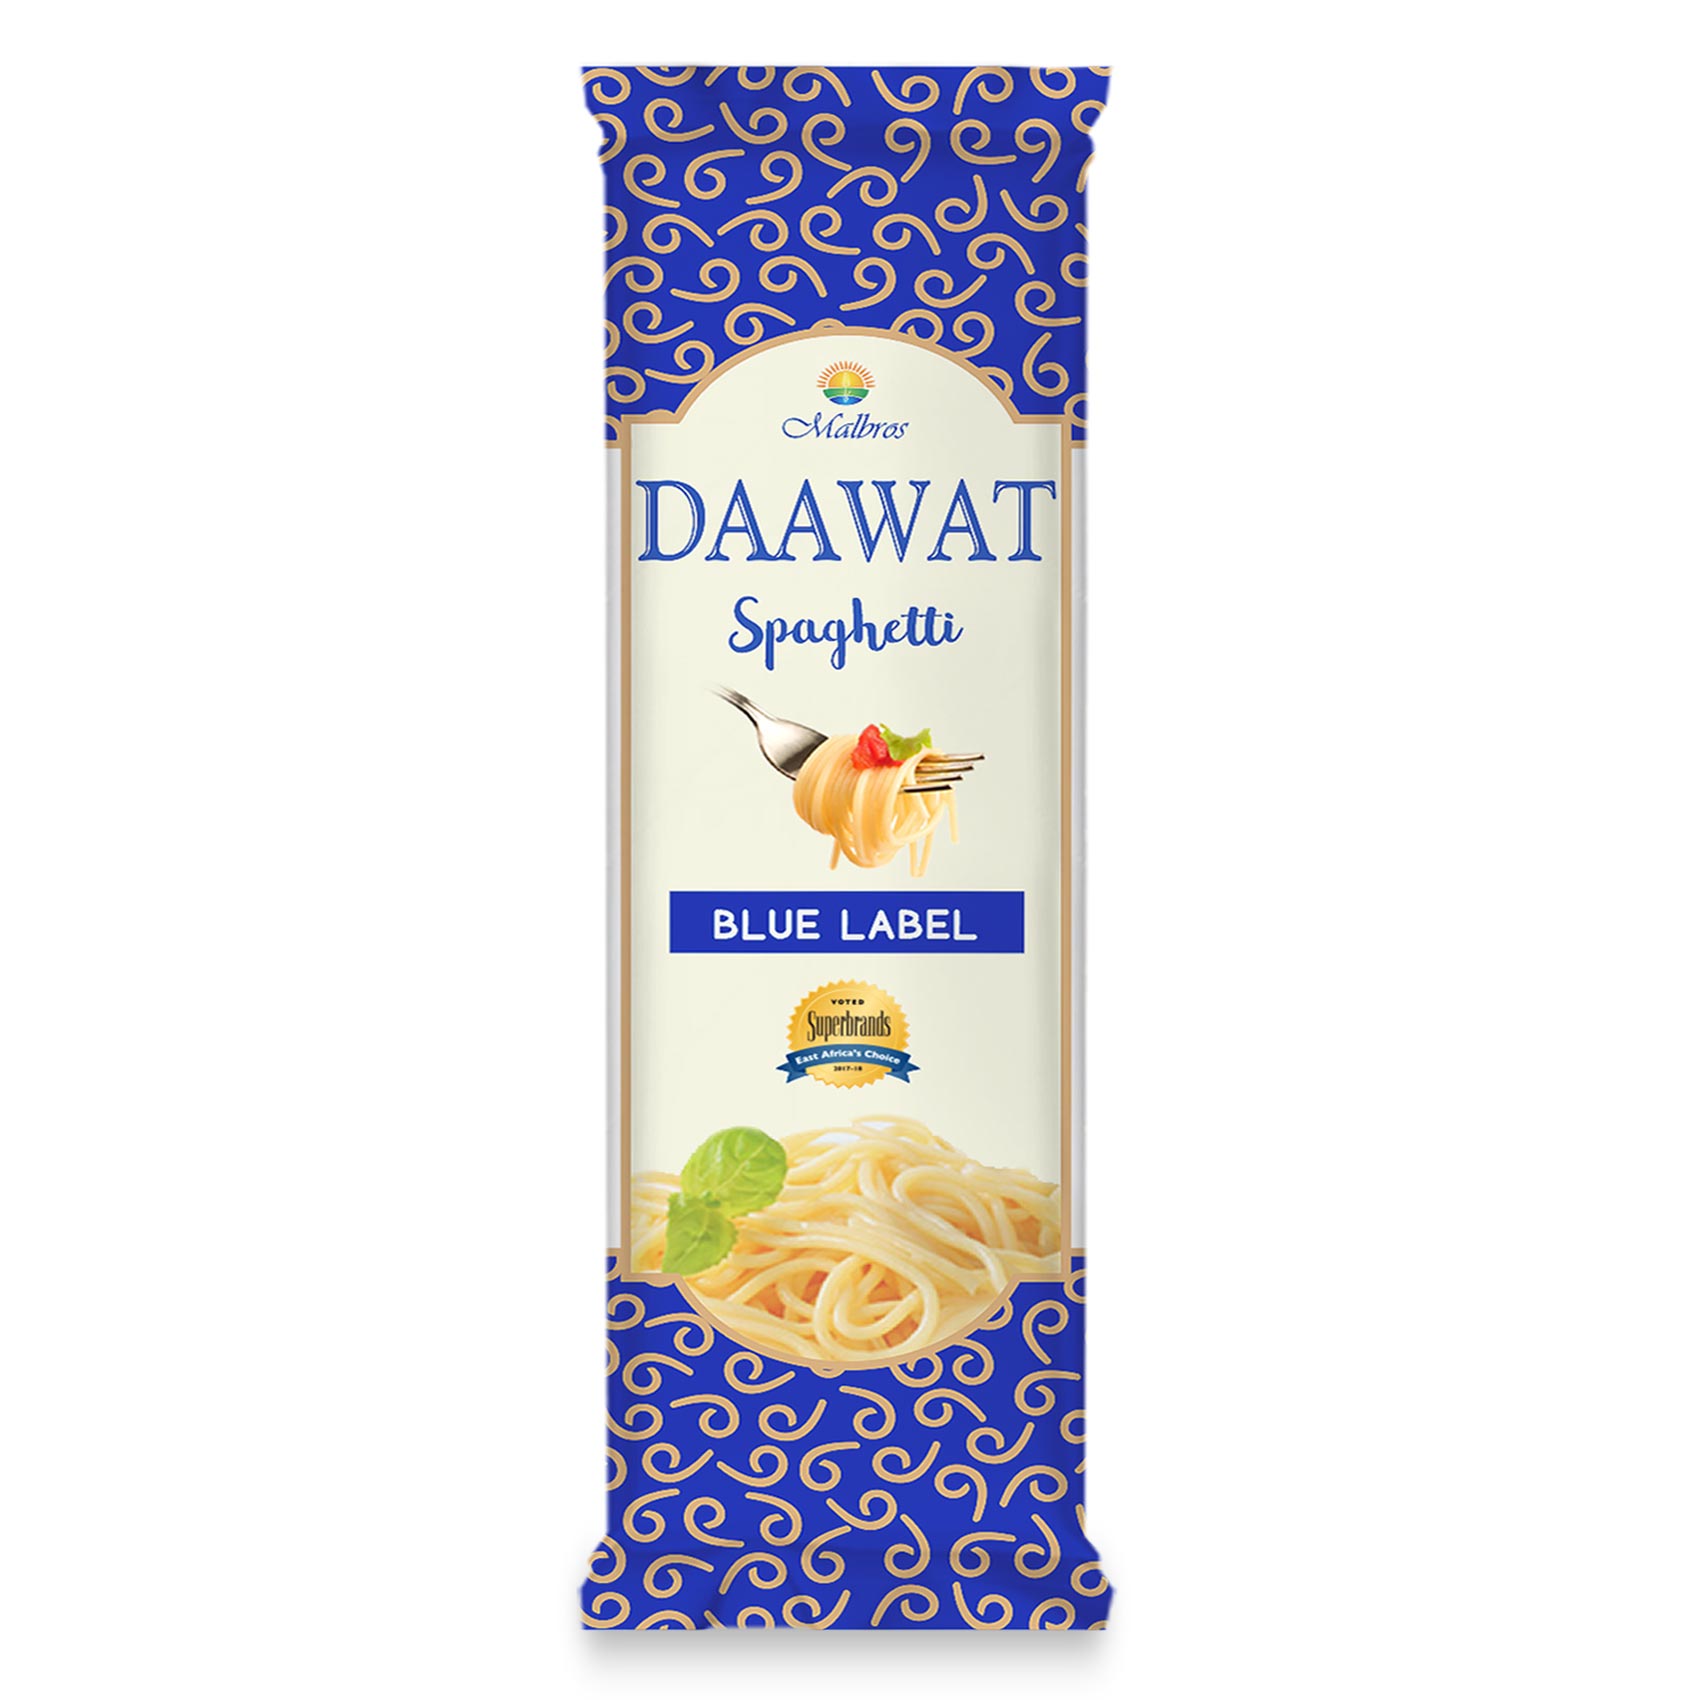 Daawat Blue Label Spaghetti 700g